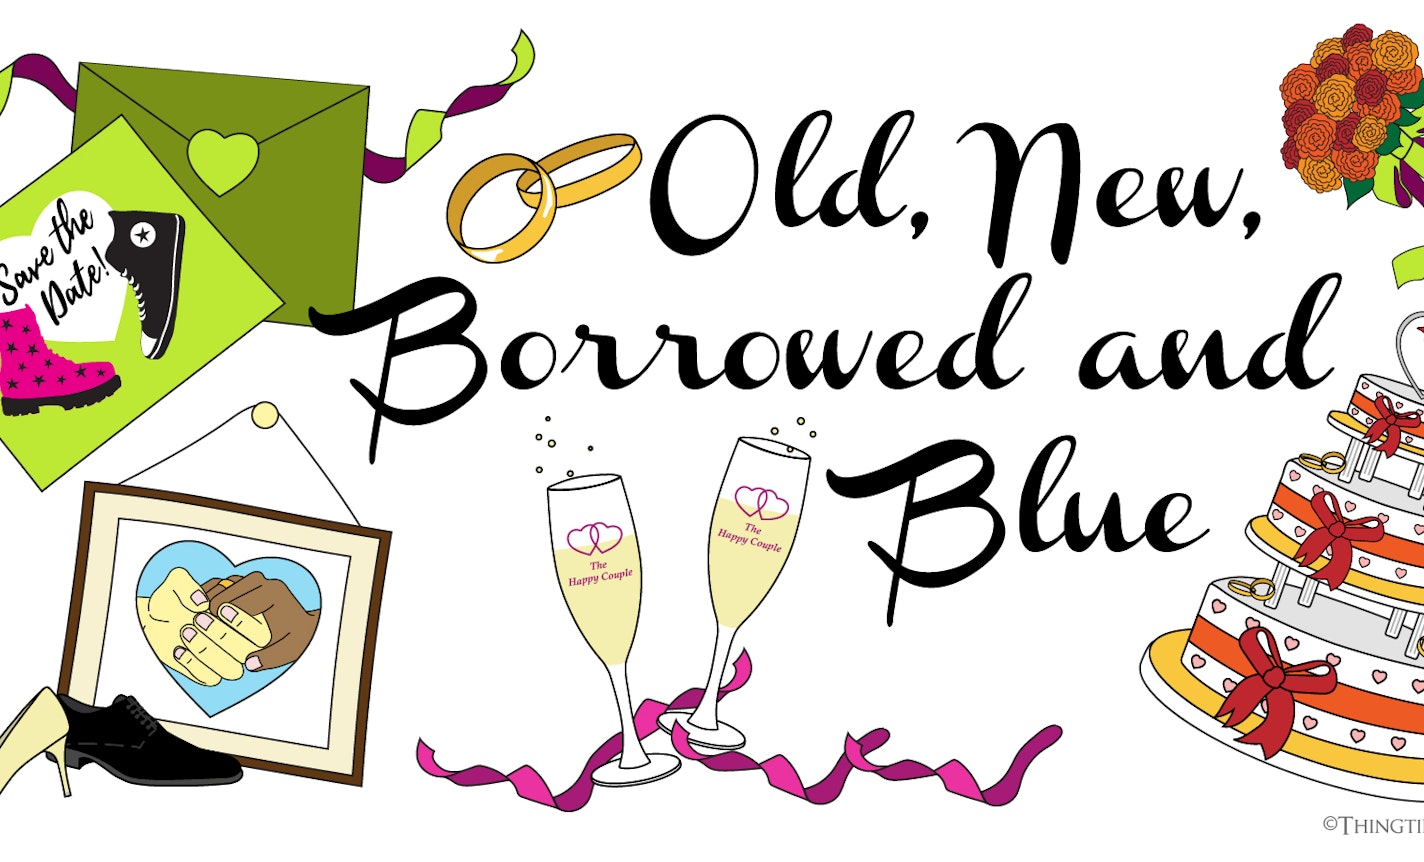 Old, New, Borrowed & Blue